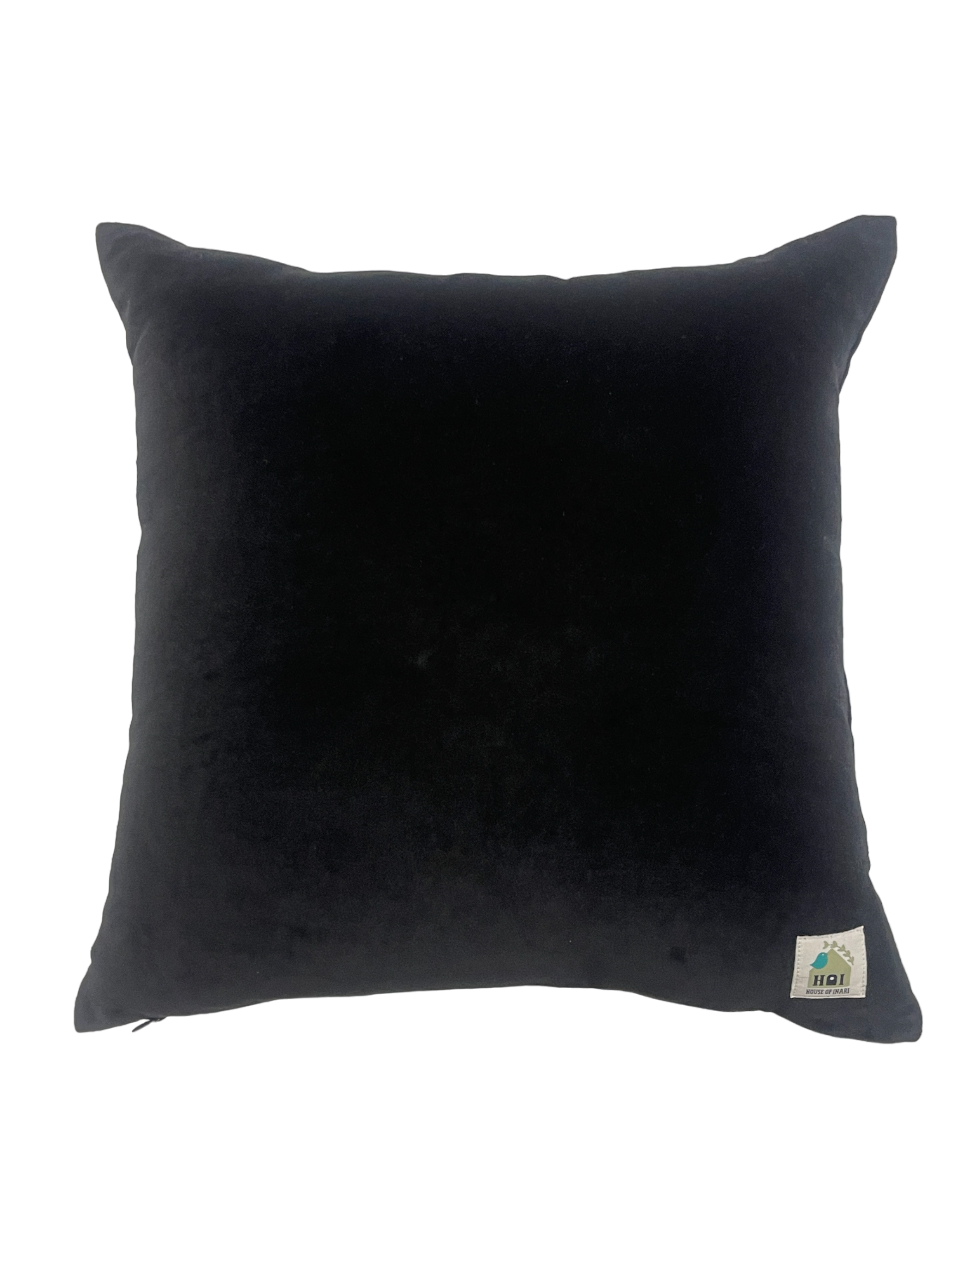 Snow Leopard Velvet Embroidered Black Cushion Cover